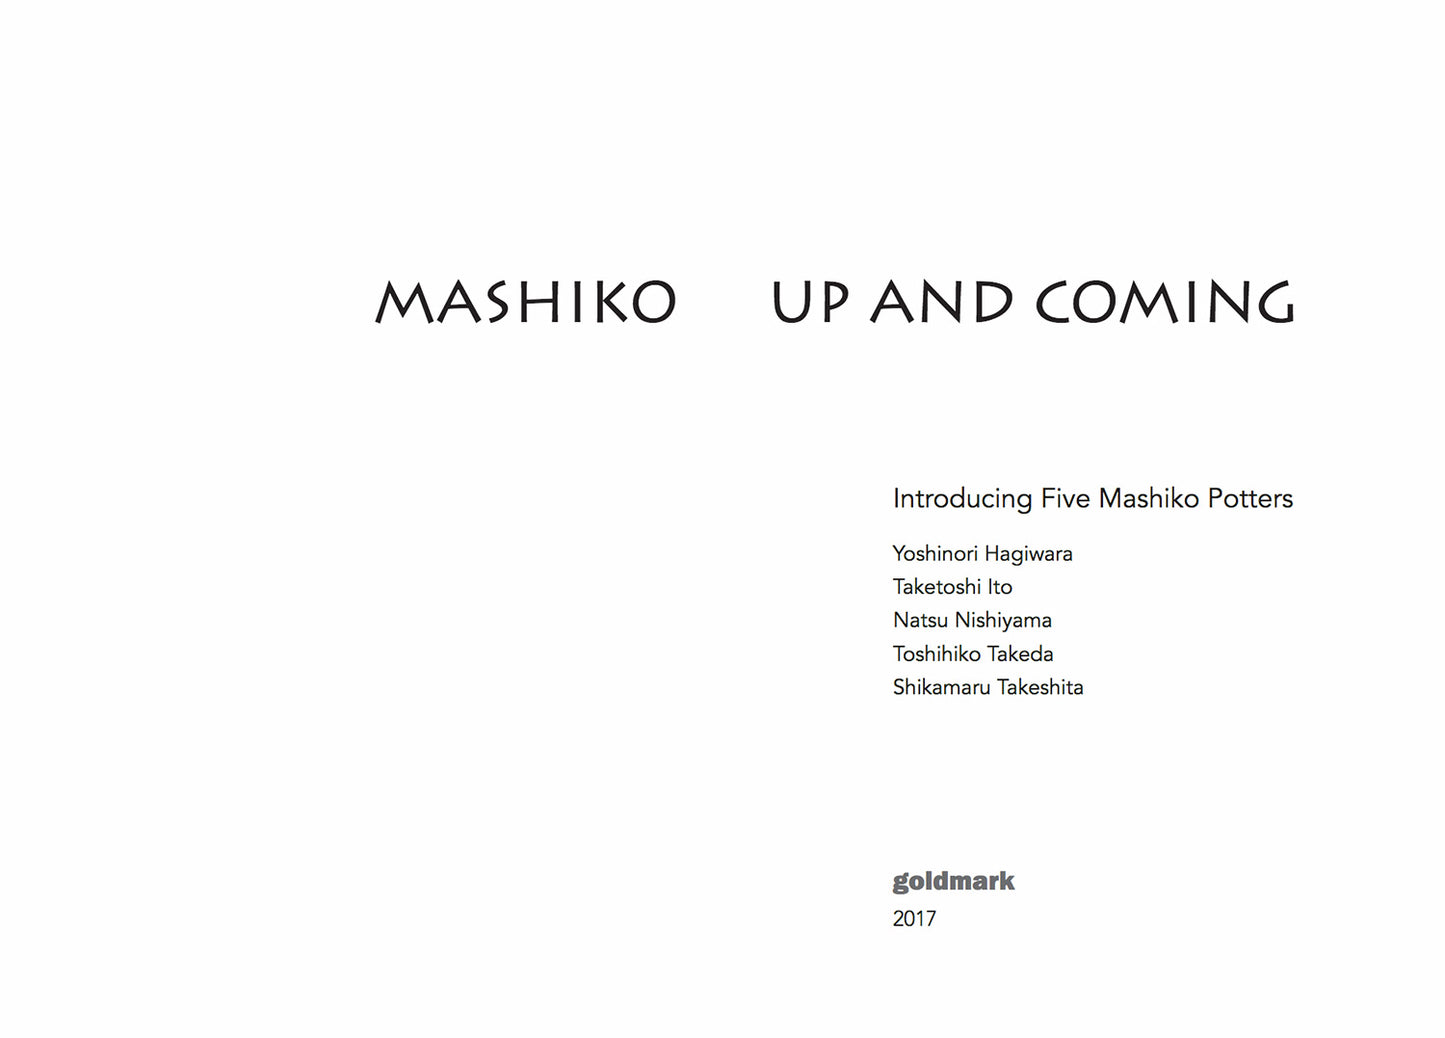 Mashiko: Up and Coming